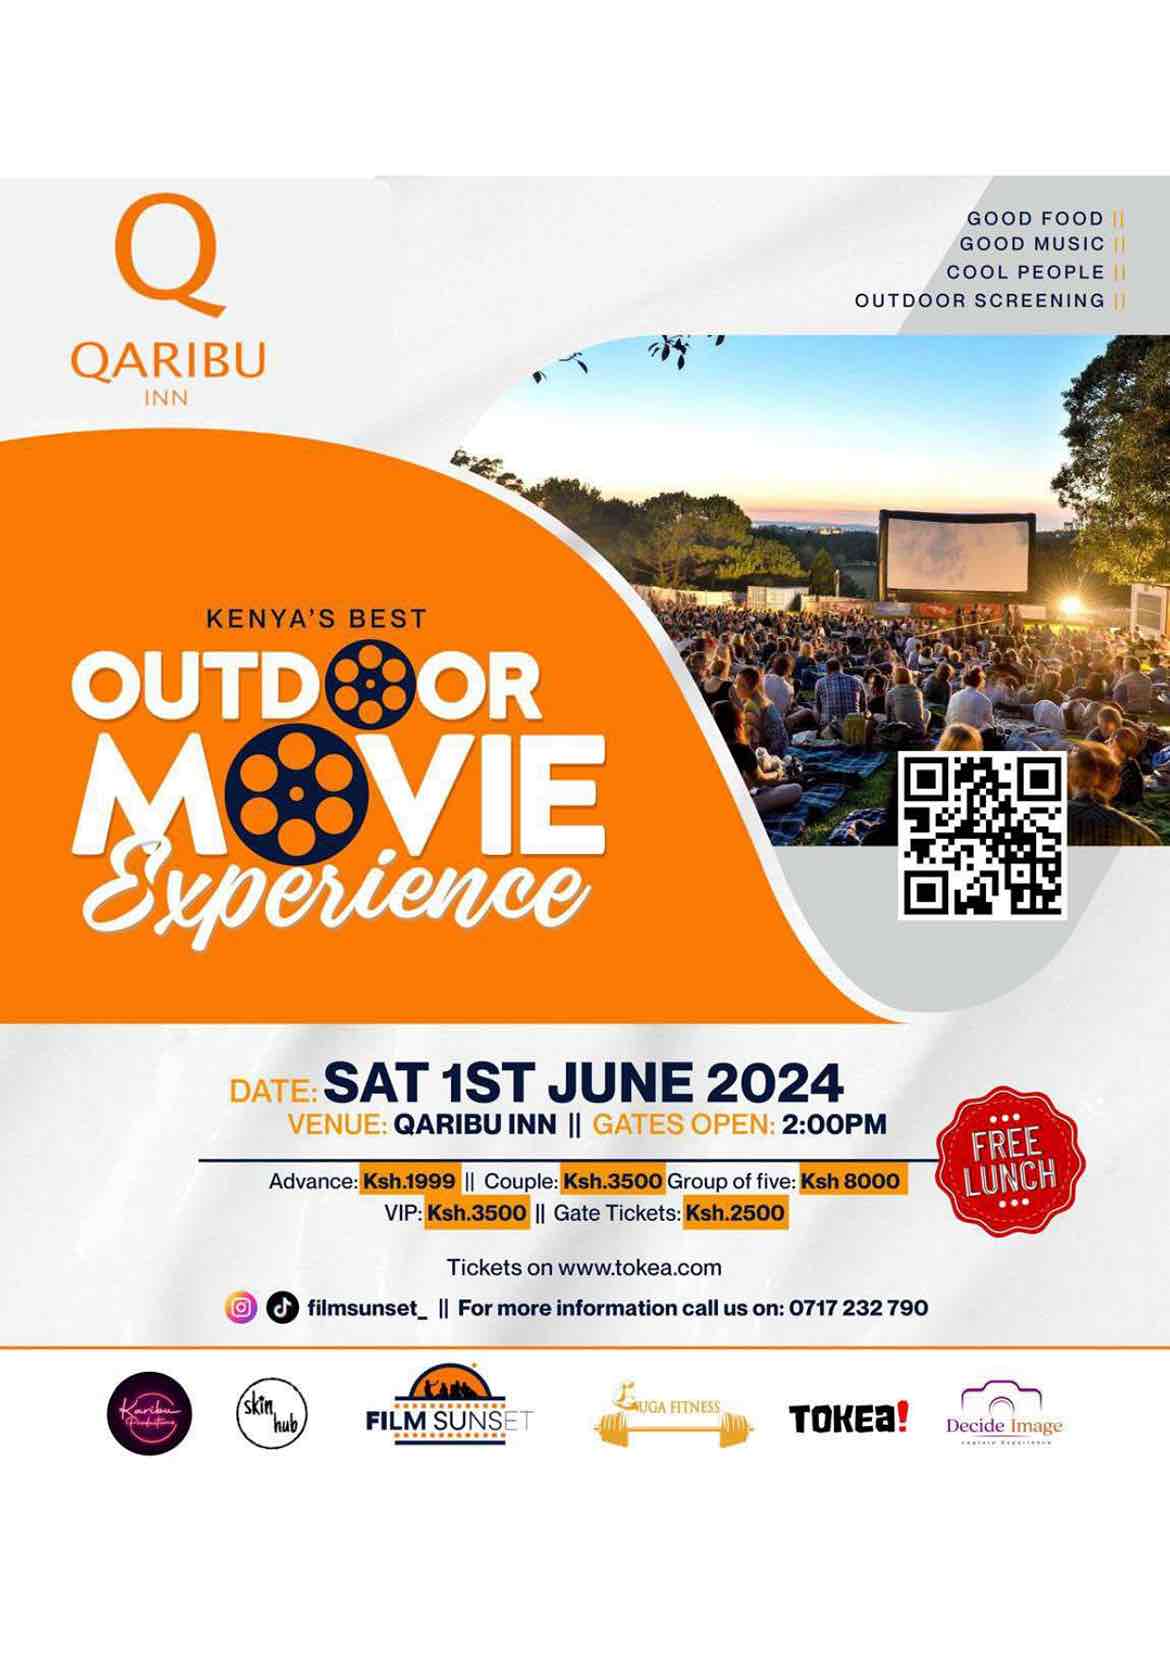 Dive into an Epic Outdoor Movie Experience at Qaribu Inn!